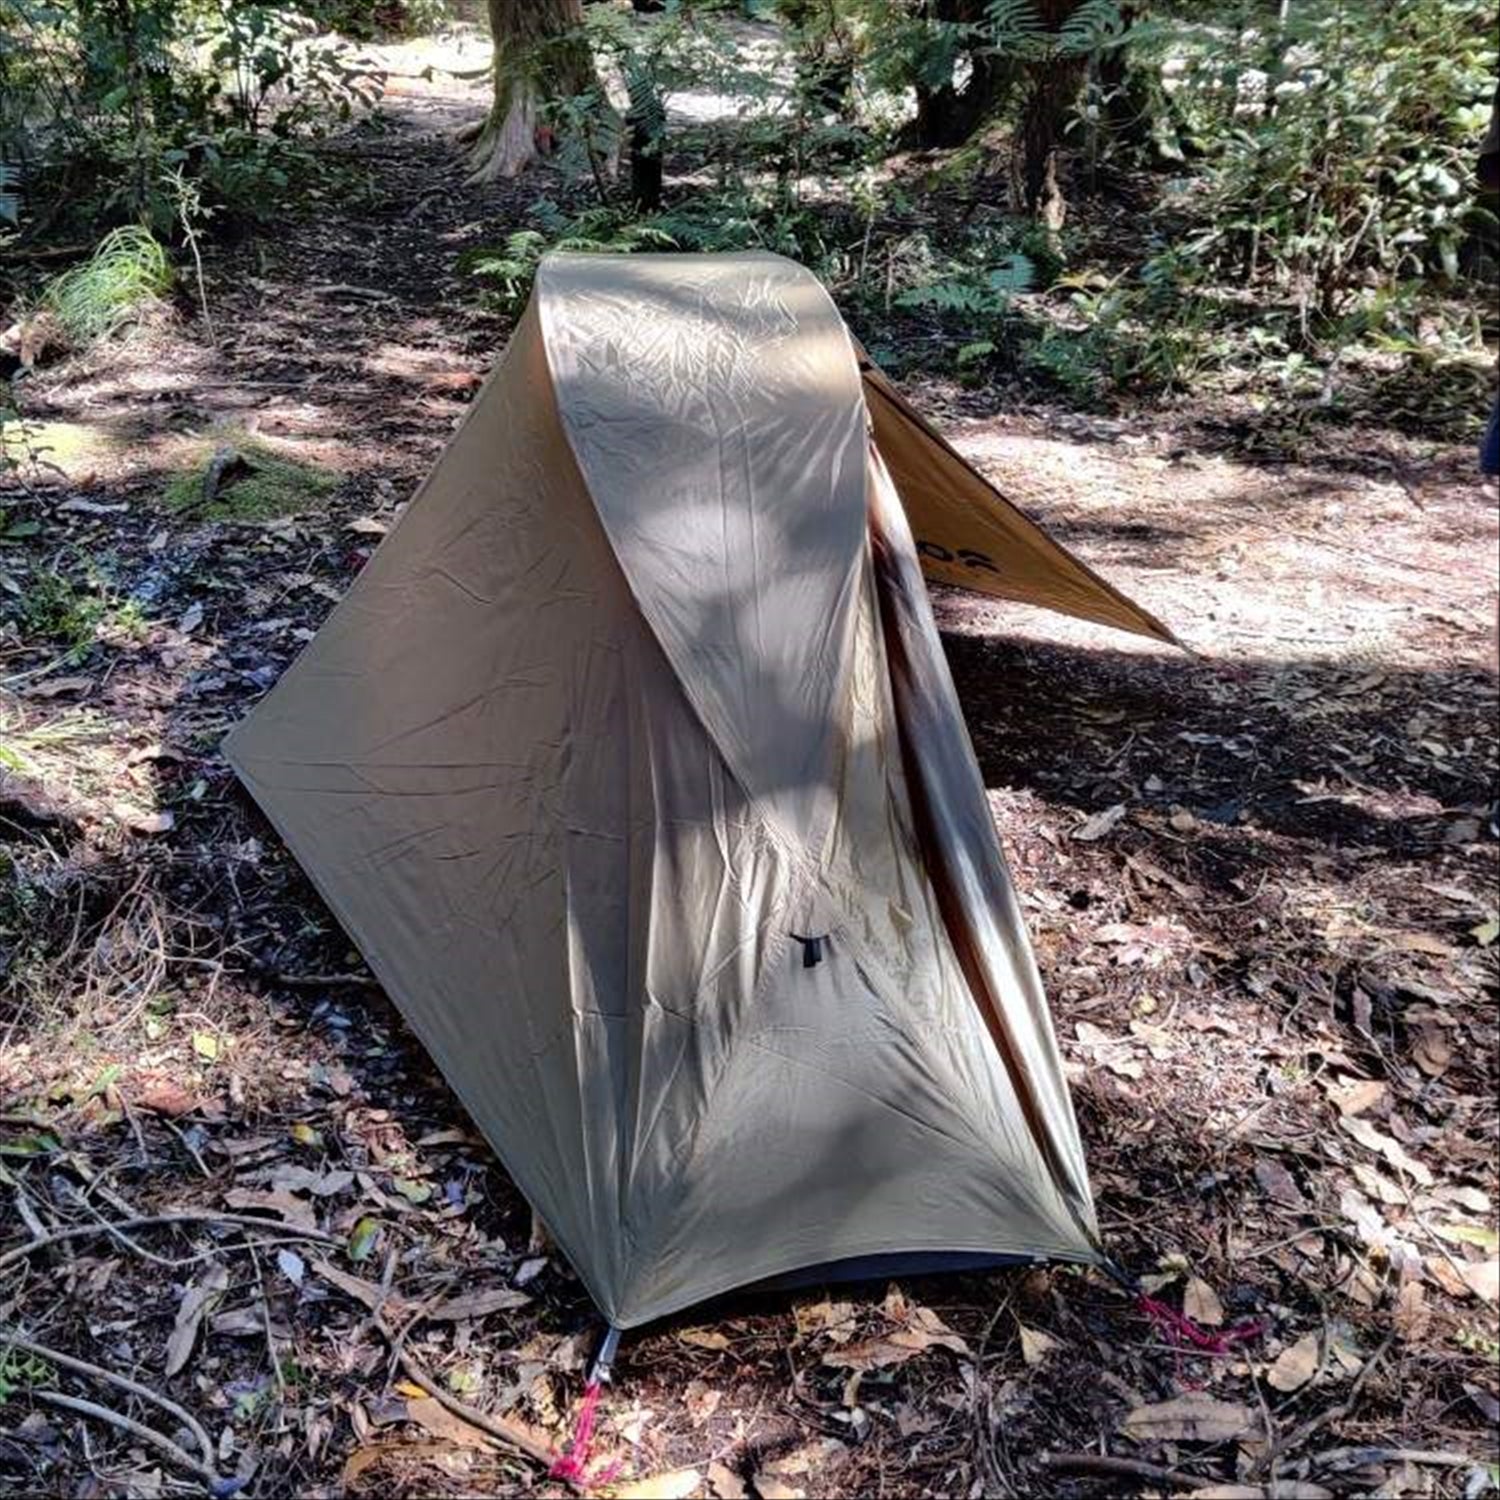 Orson Orson RDR 1 Person Tent - Extra Long, 1.75kg (2022 version)